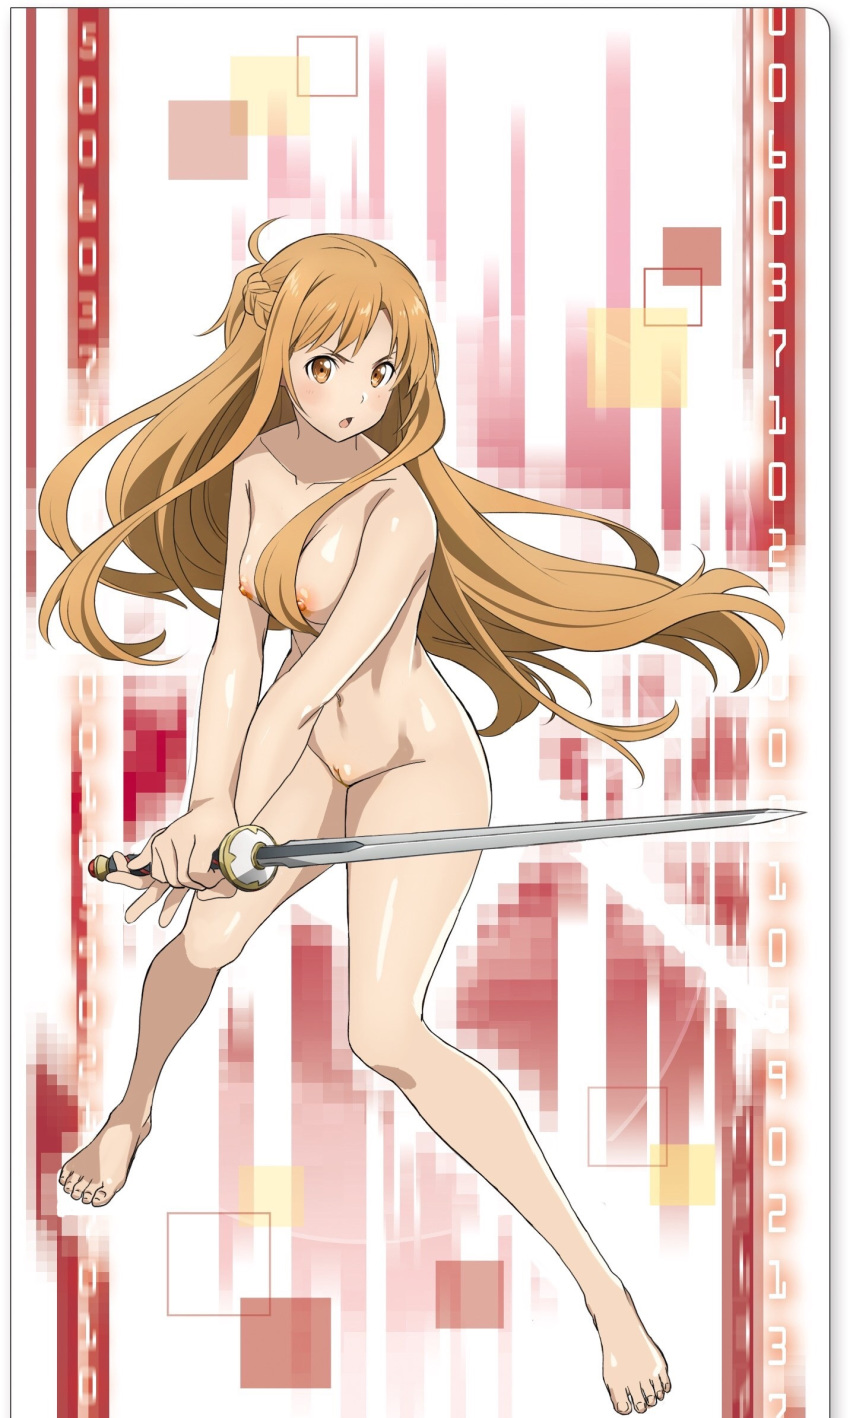 online yuuki nude art sword Witcher 3 where is ciri